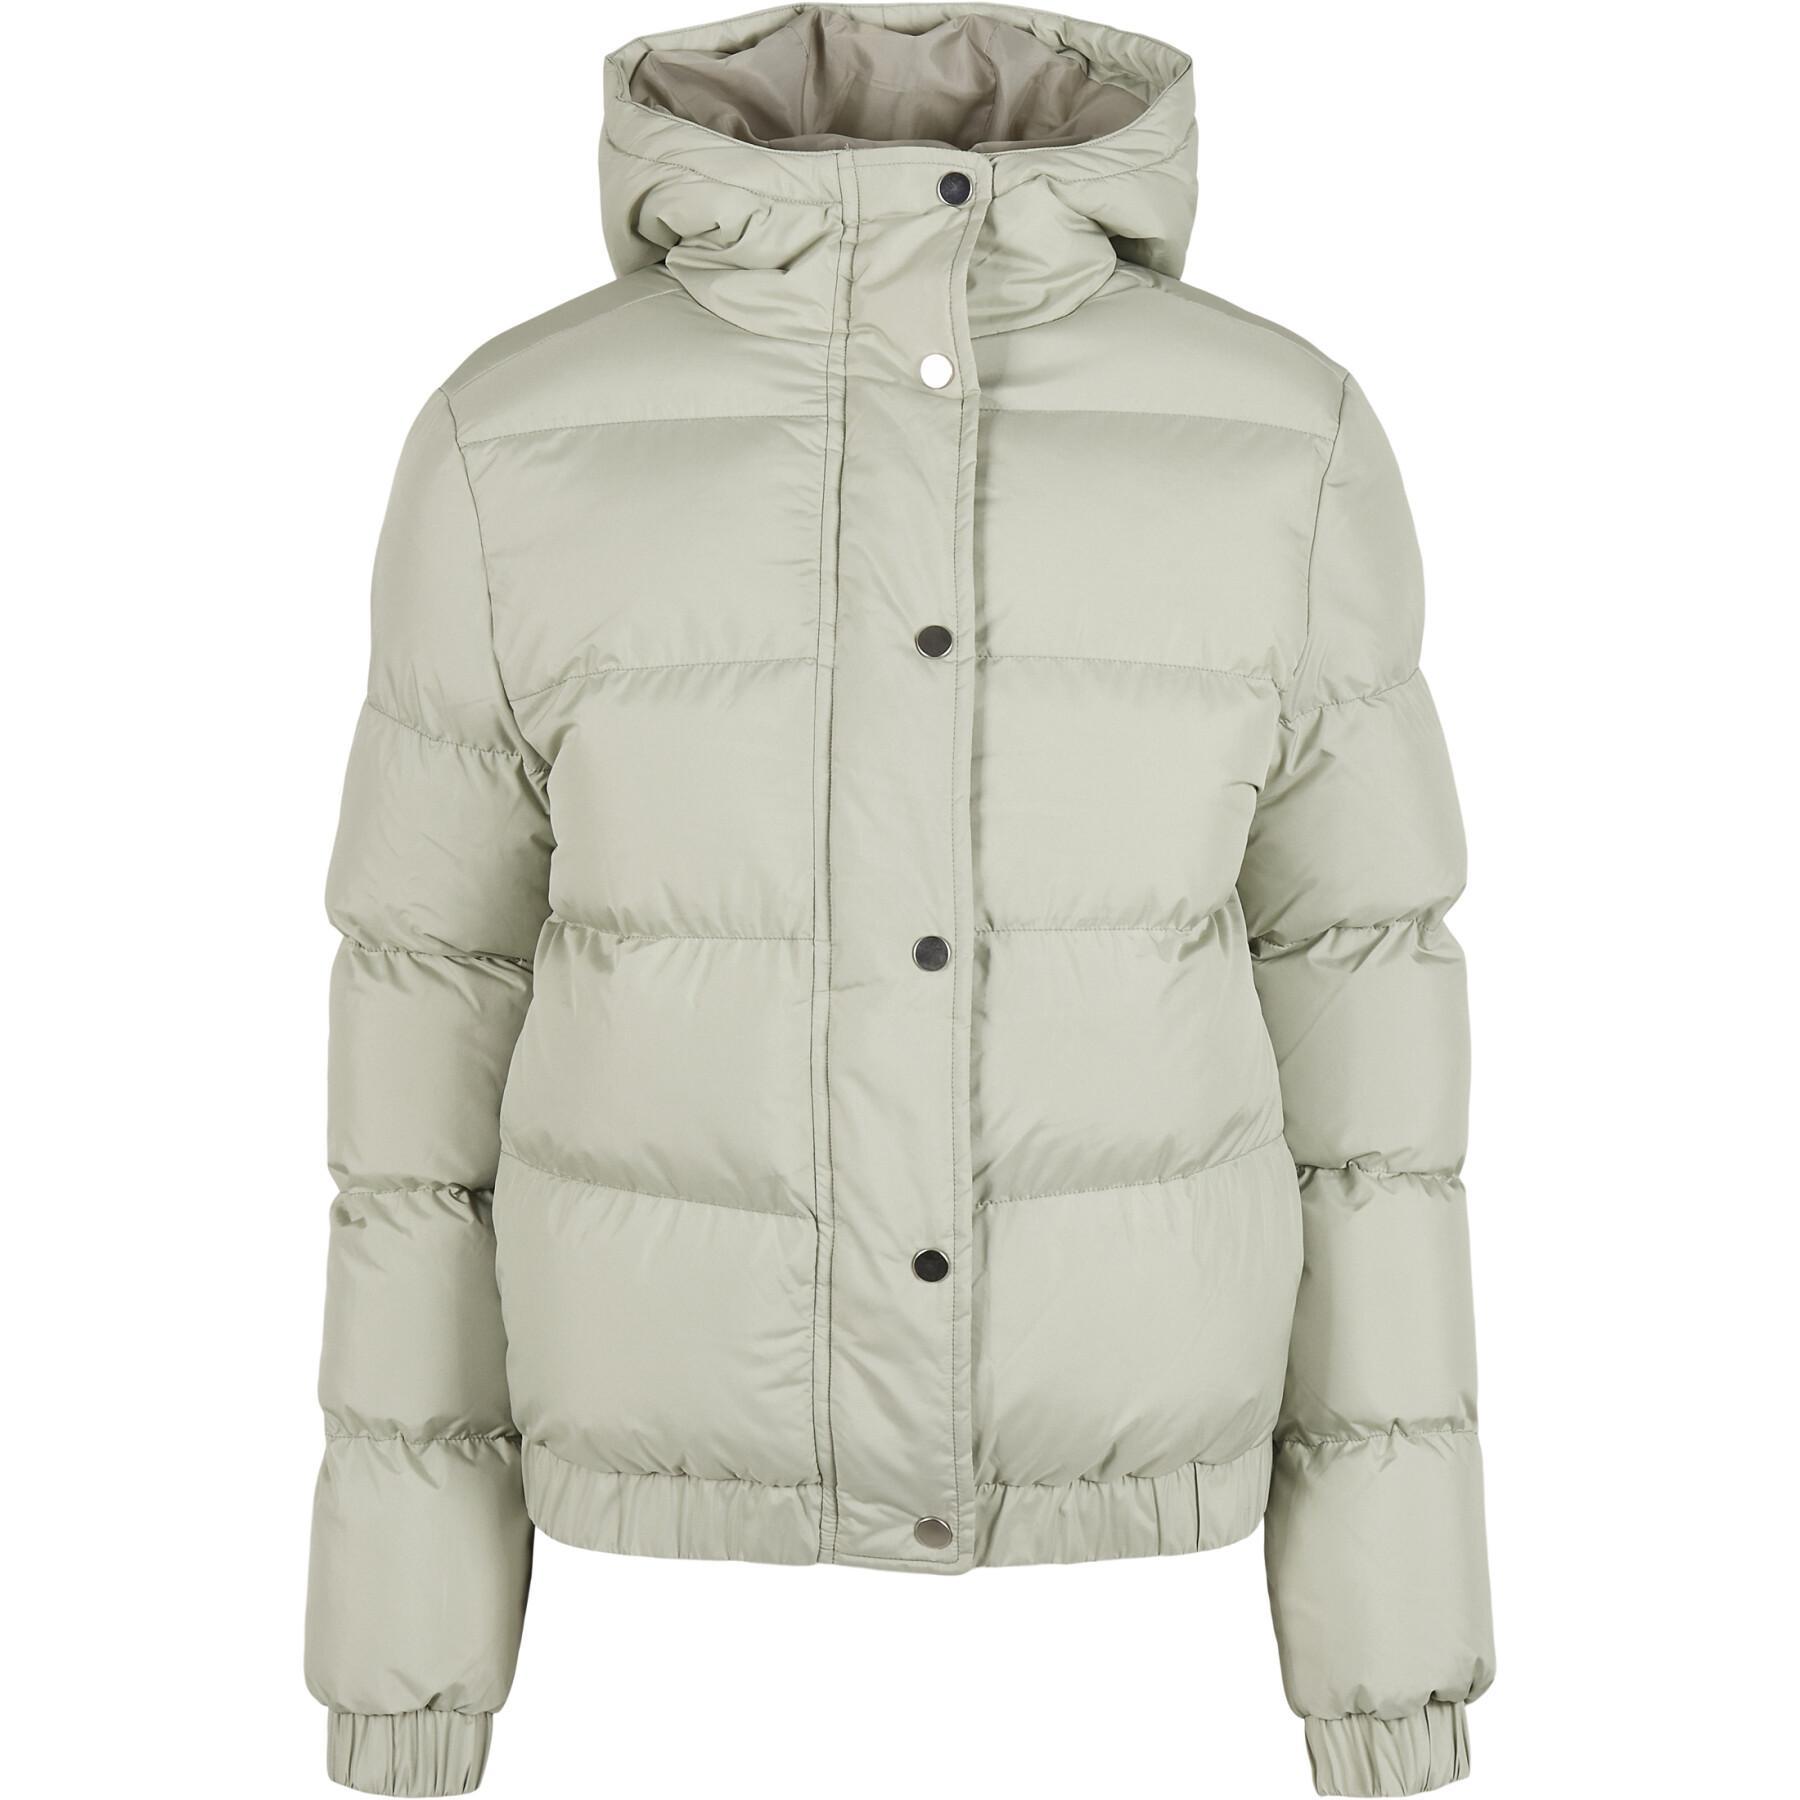 Women's jacket Urban Classics hooded puffer- large sizes